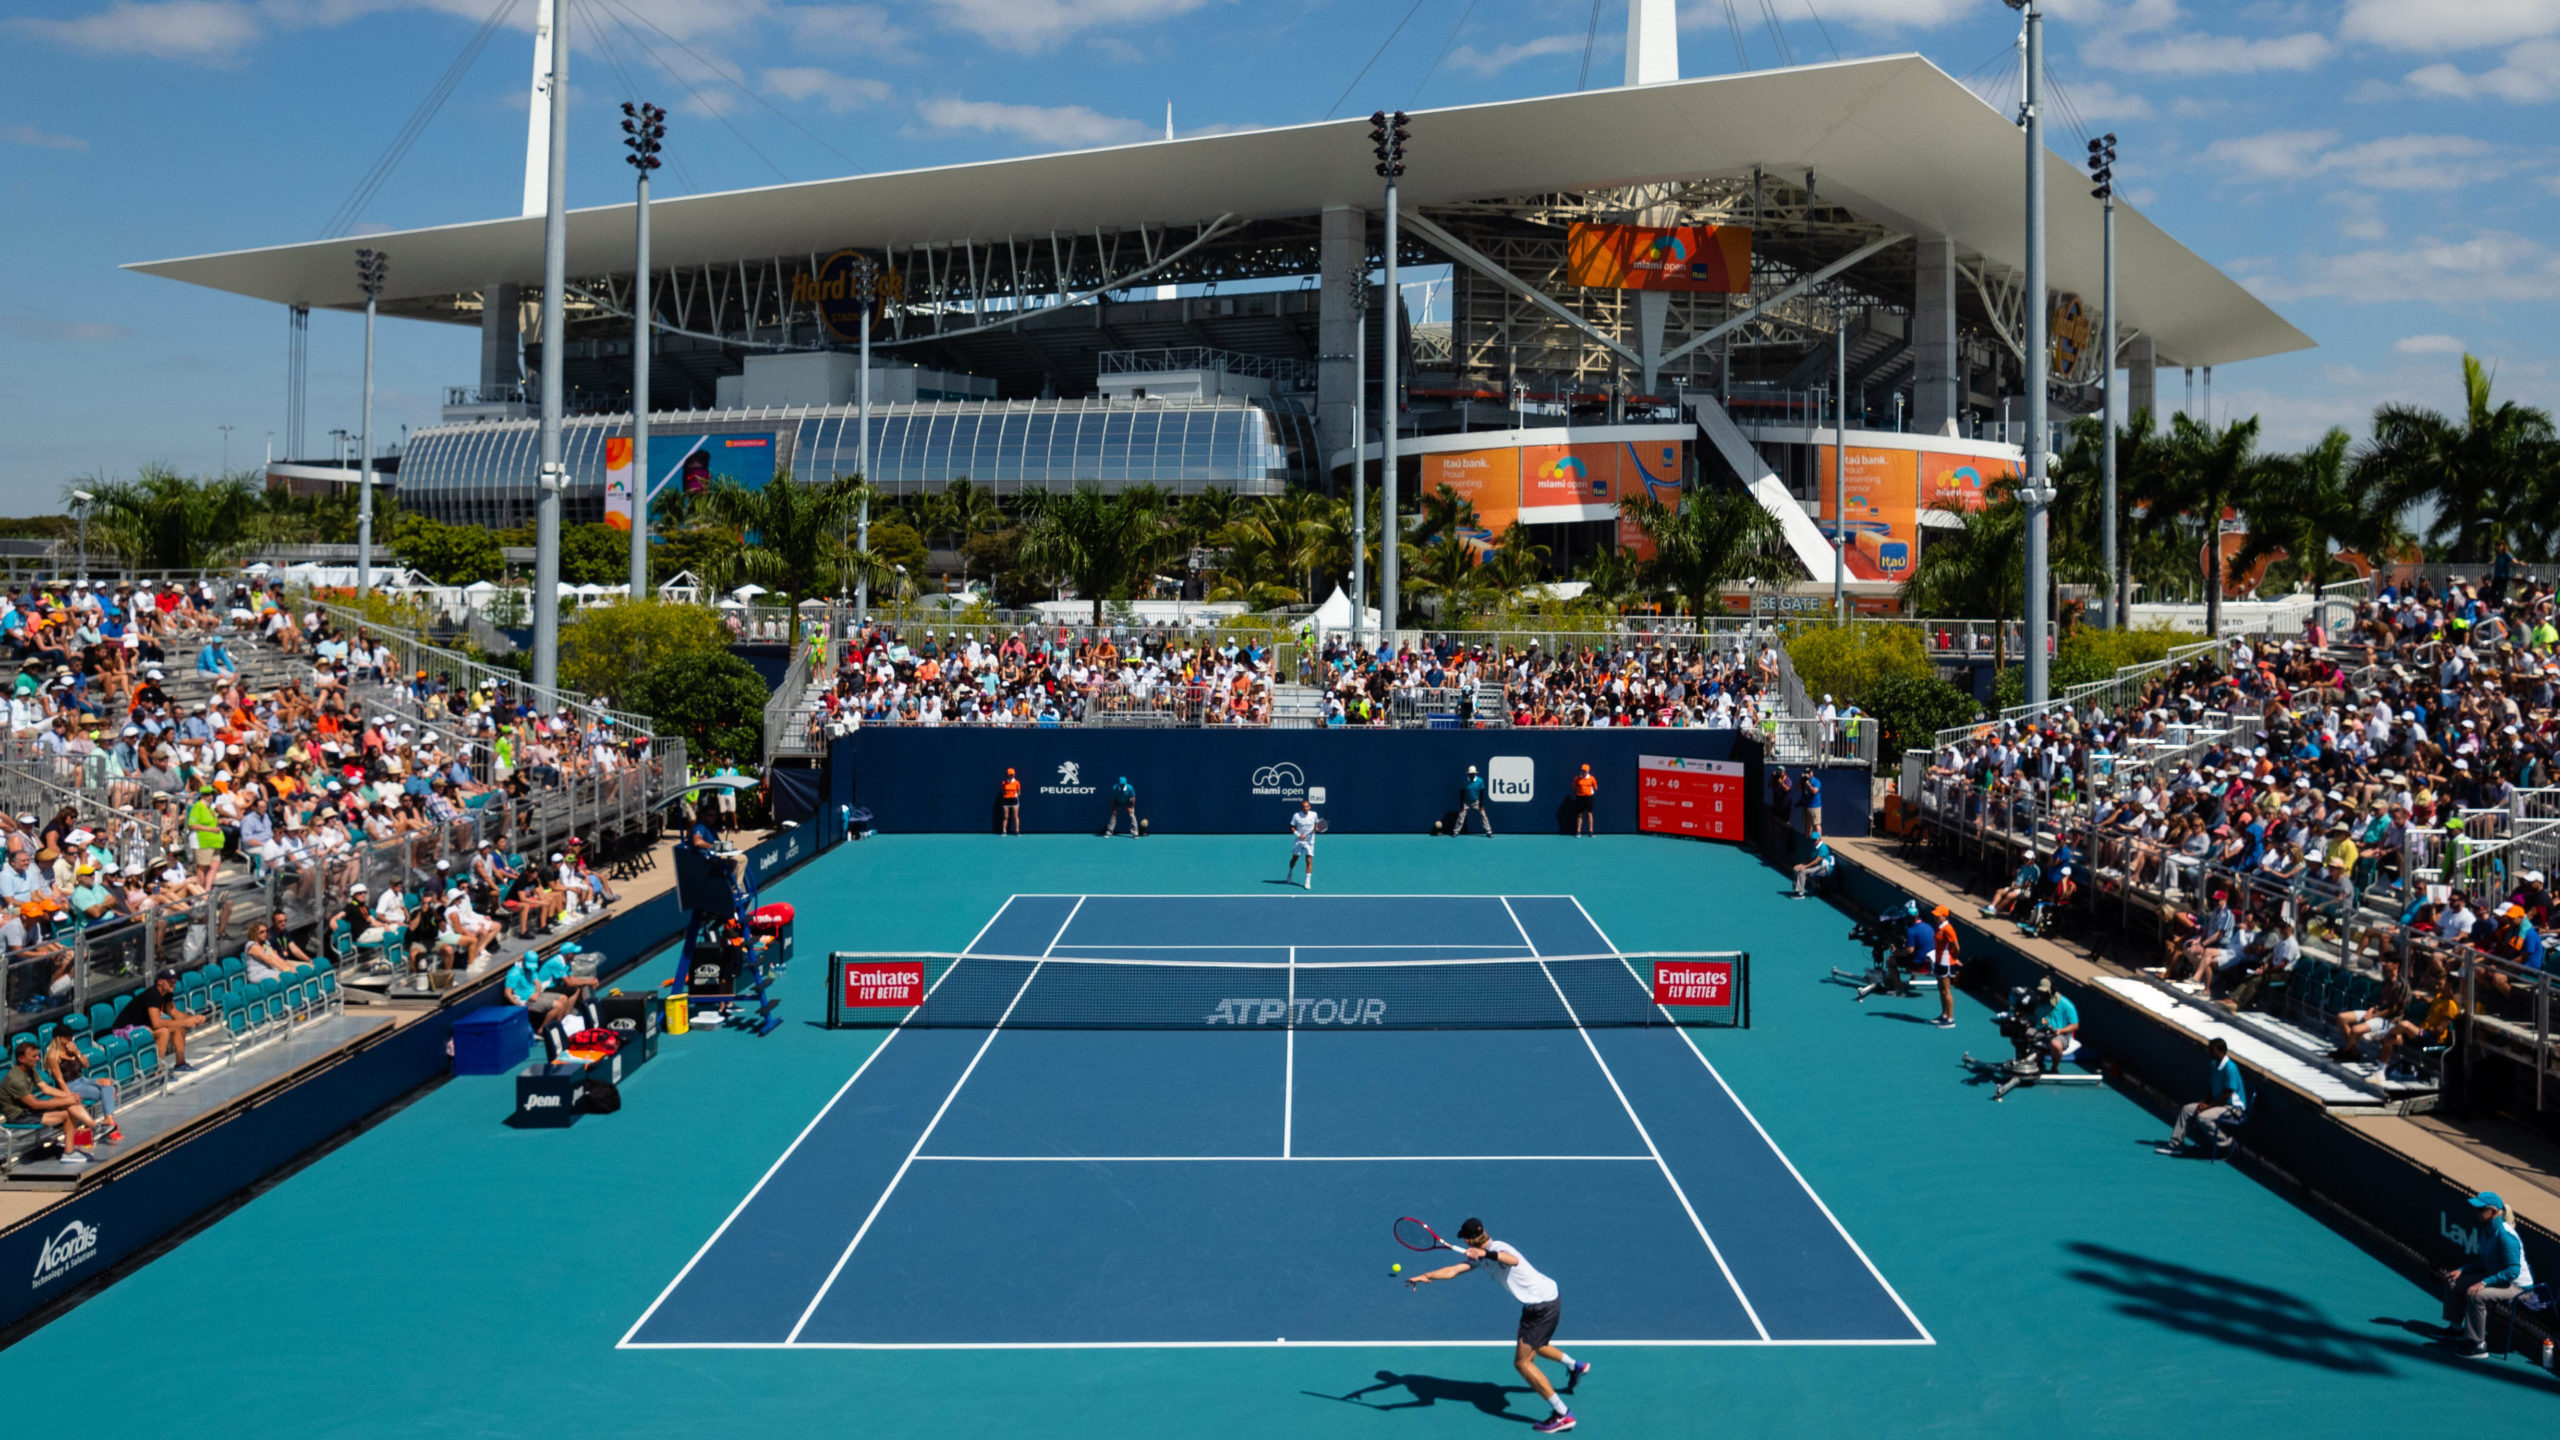 Tournoi De Tennis De Miami Miami Open 2019 rejintelligent